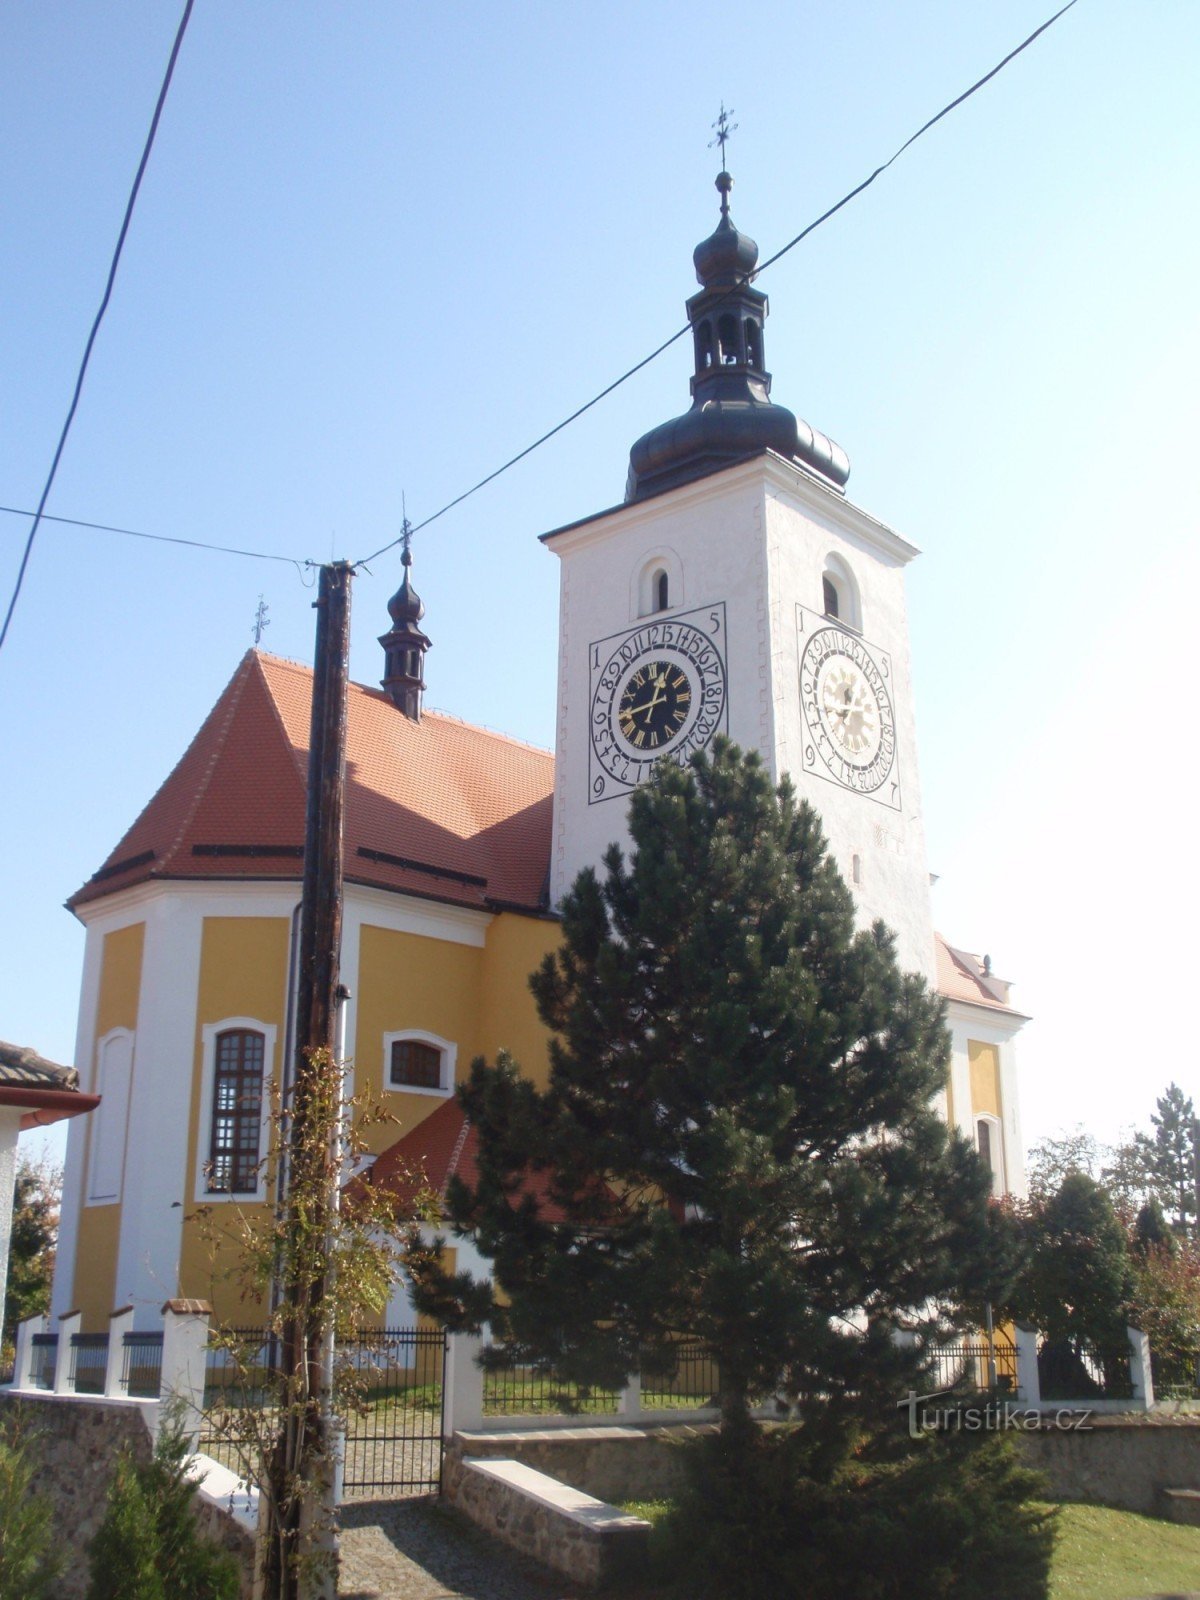 La ciudad de Stařeč cerca de Třebíč